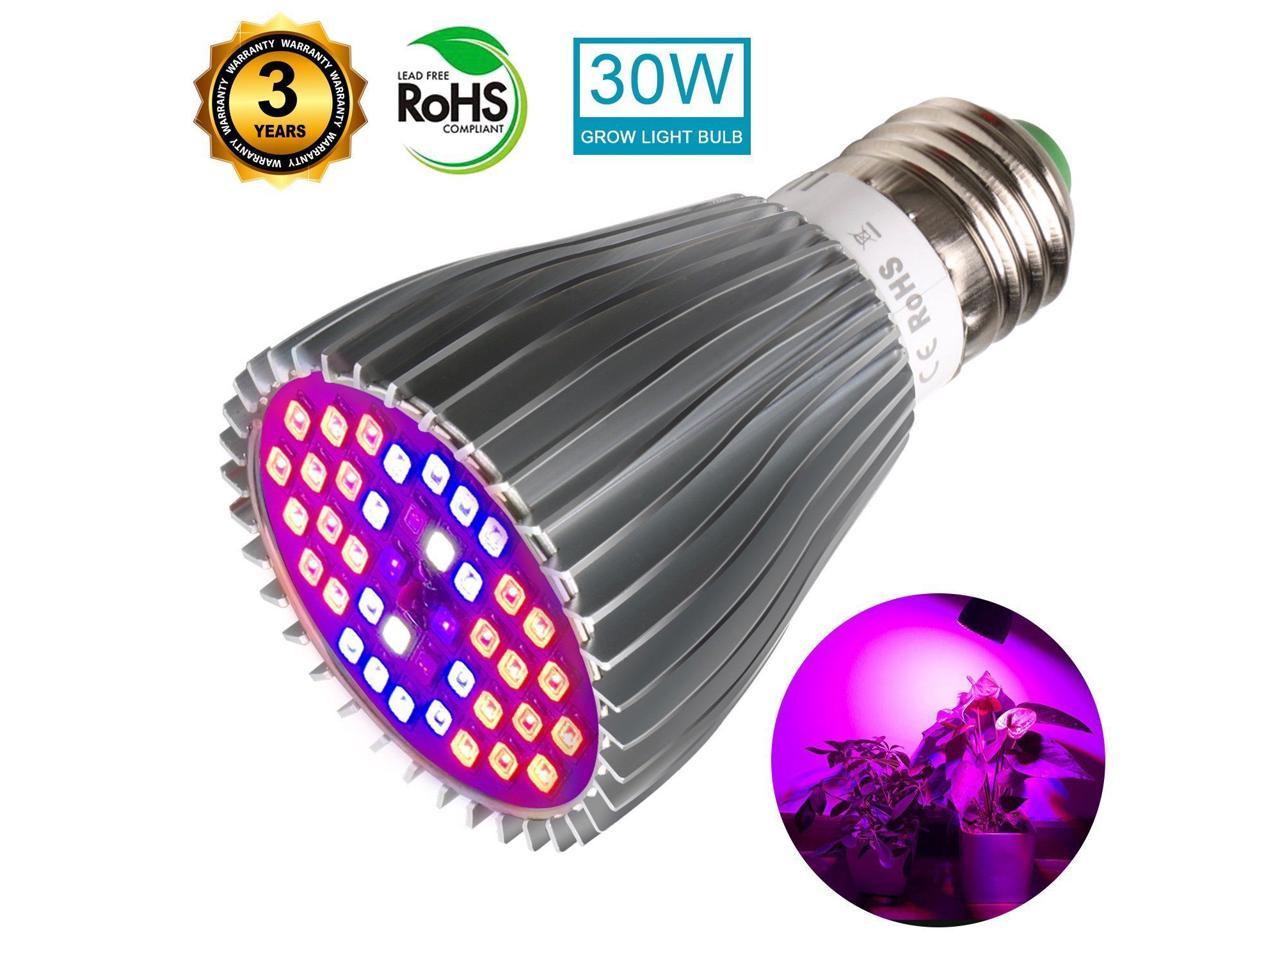 Grow Light Bulb170W Equivalent /UFO Red/Blue LED  30-Watt Bulb Dimmable NEW